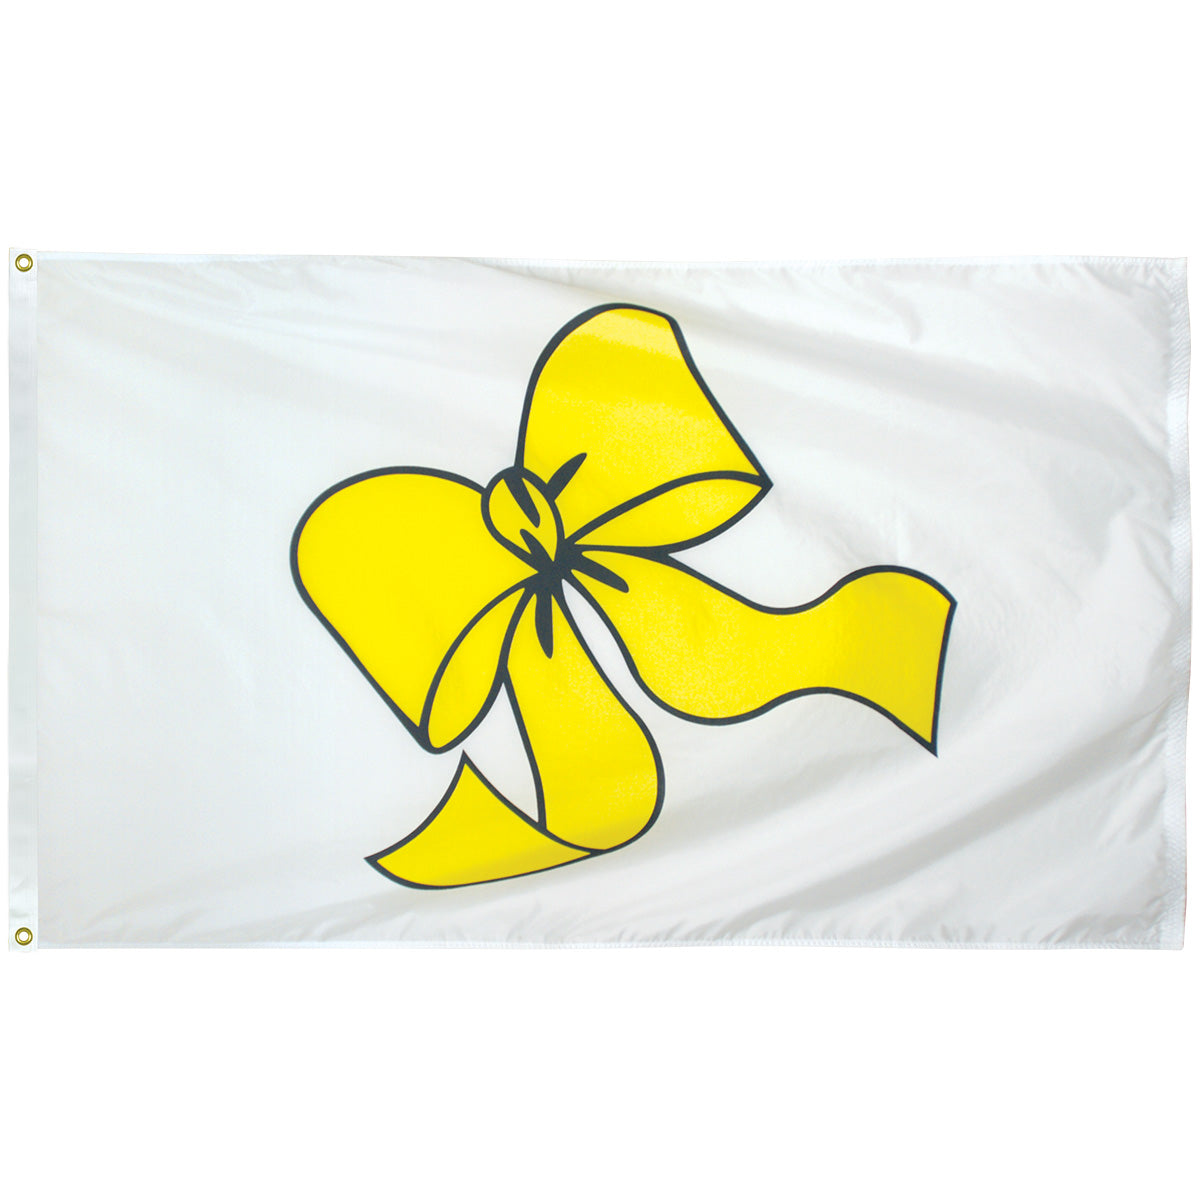 3'x5' Nylon Yellow Ribbon Flag